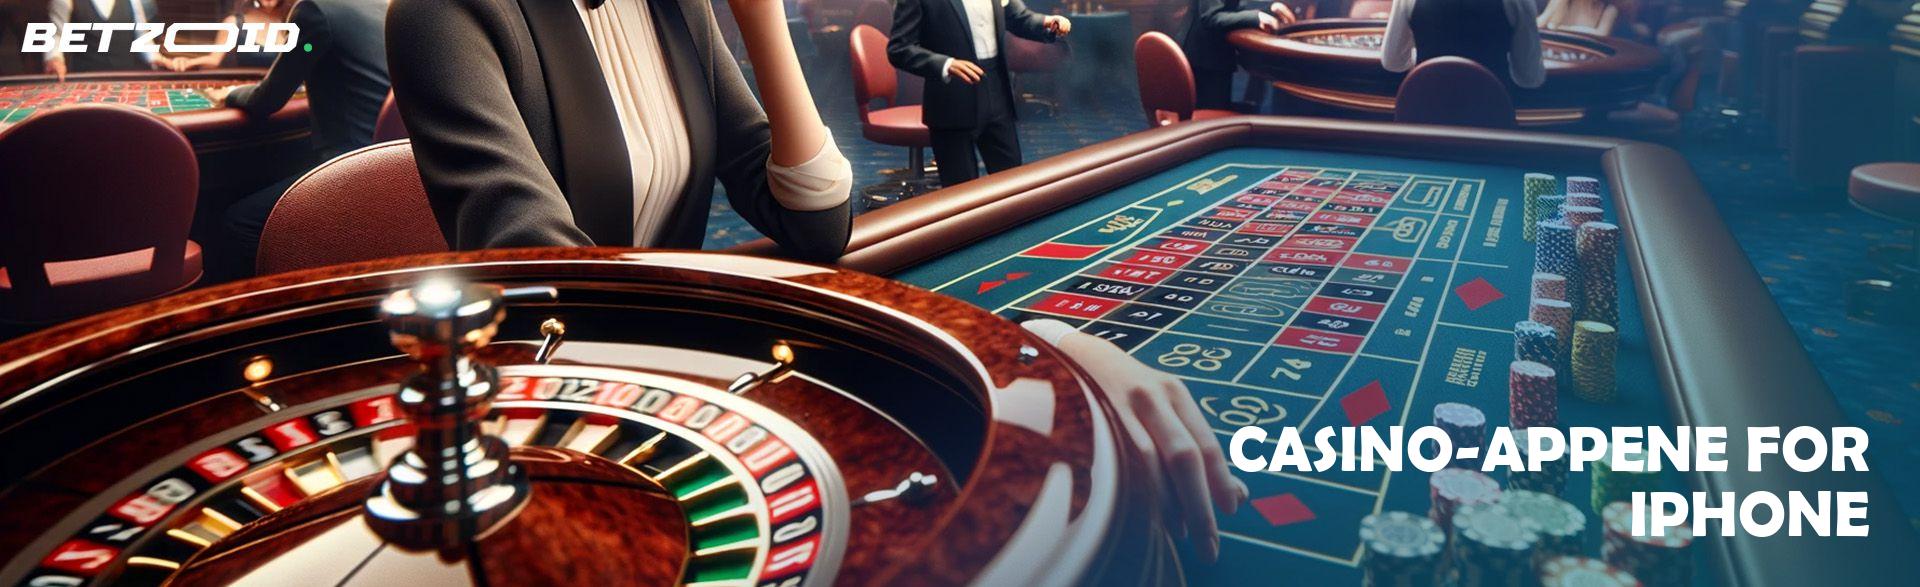 Casino-appene for iPhone.